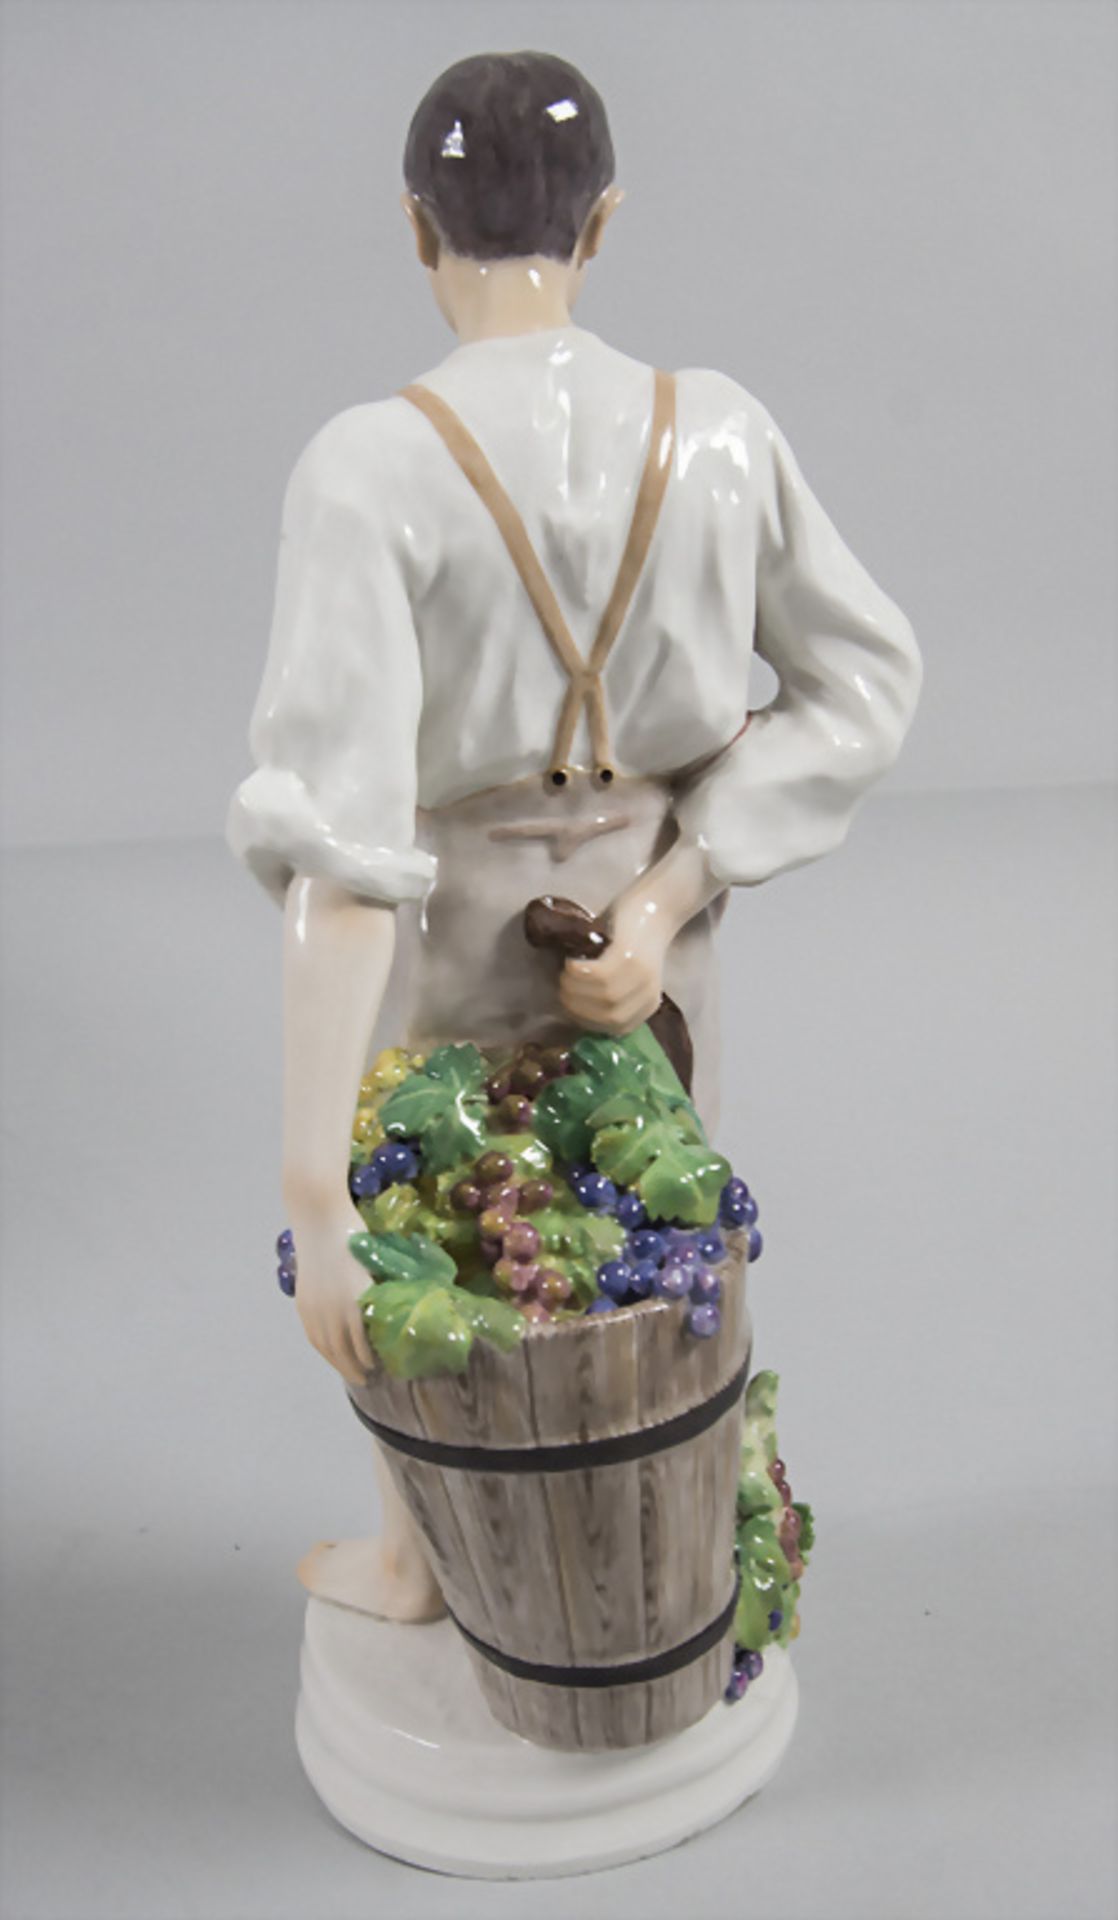 Jugendstil Figur 'Winzerknabe' / An Art Nouveau figurine of a young winemaker, Theodor ... - Image 3 of 5